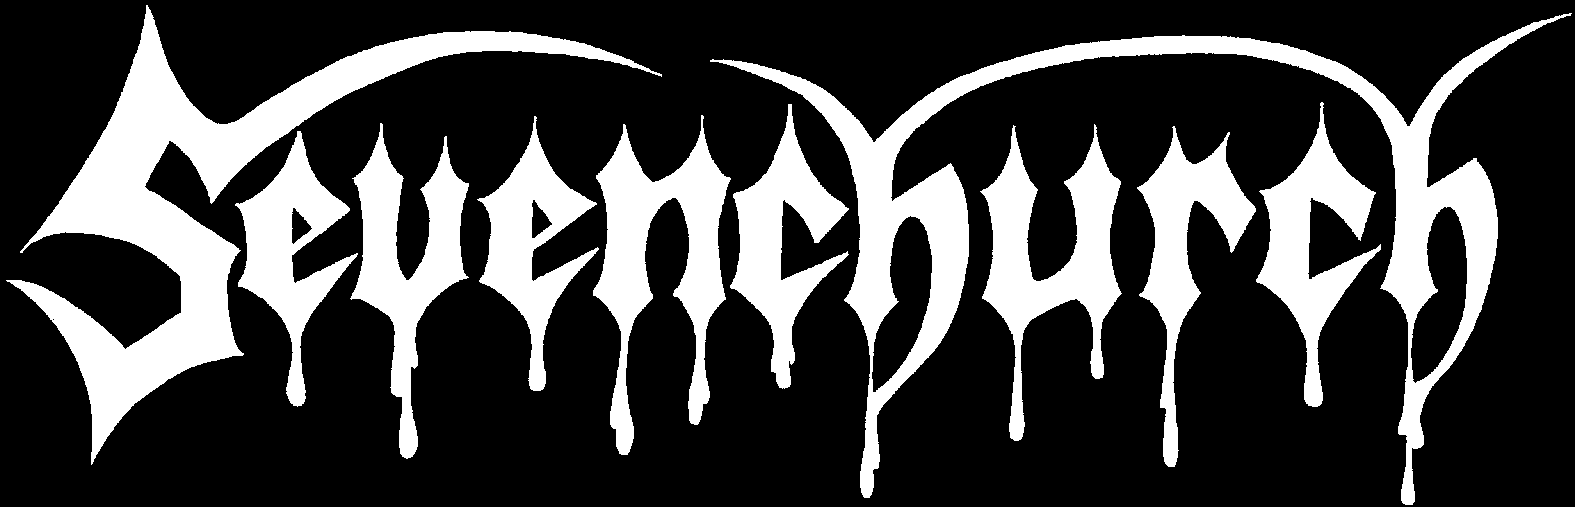 Sevenchurch Logo 5